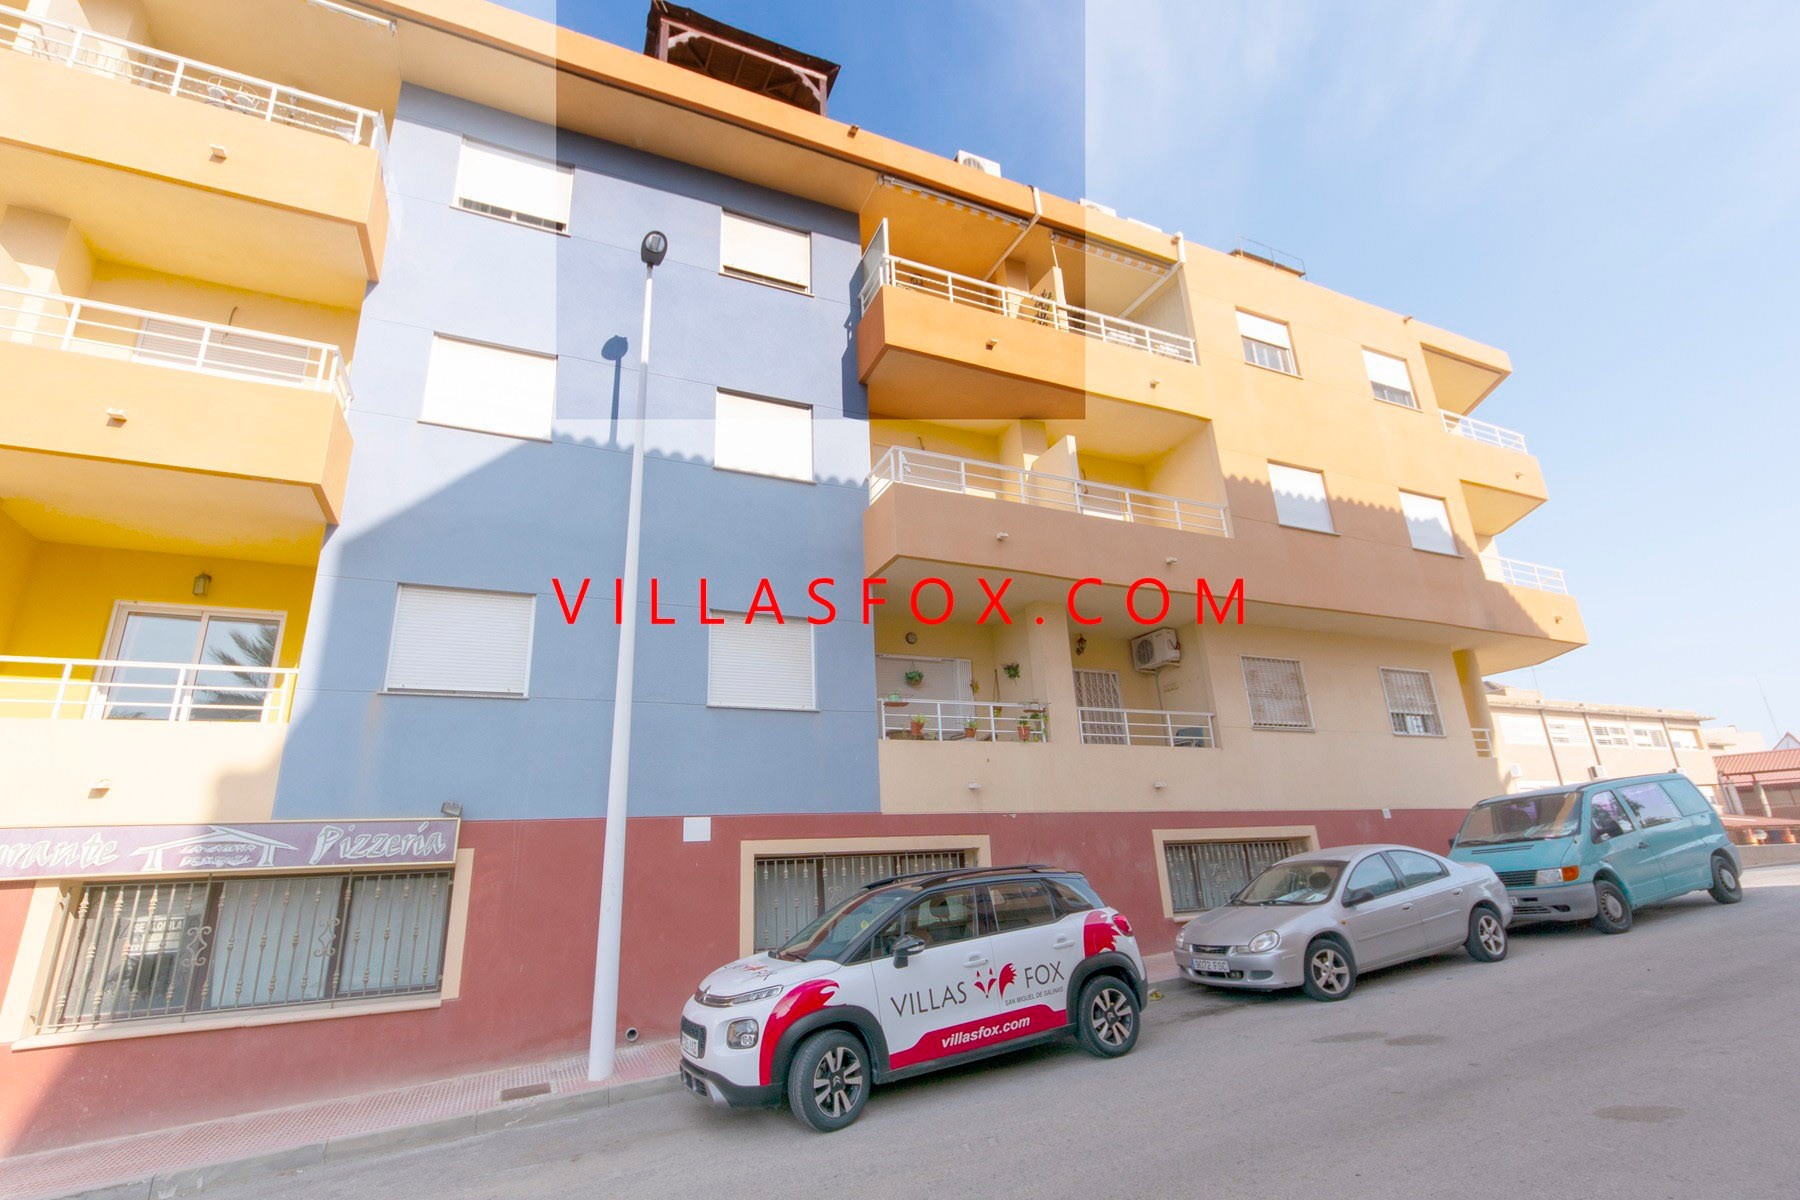 1 Сан Мигел де Салинас Апартамент в центъра на града до Villas Fox най-добрите агенти по недвижими имоти 611039449965e